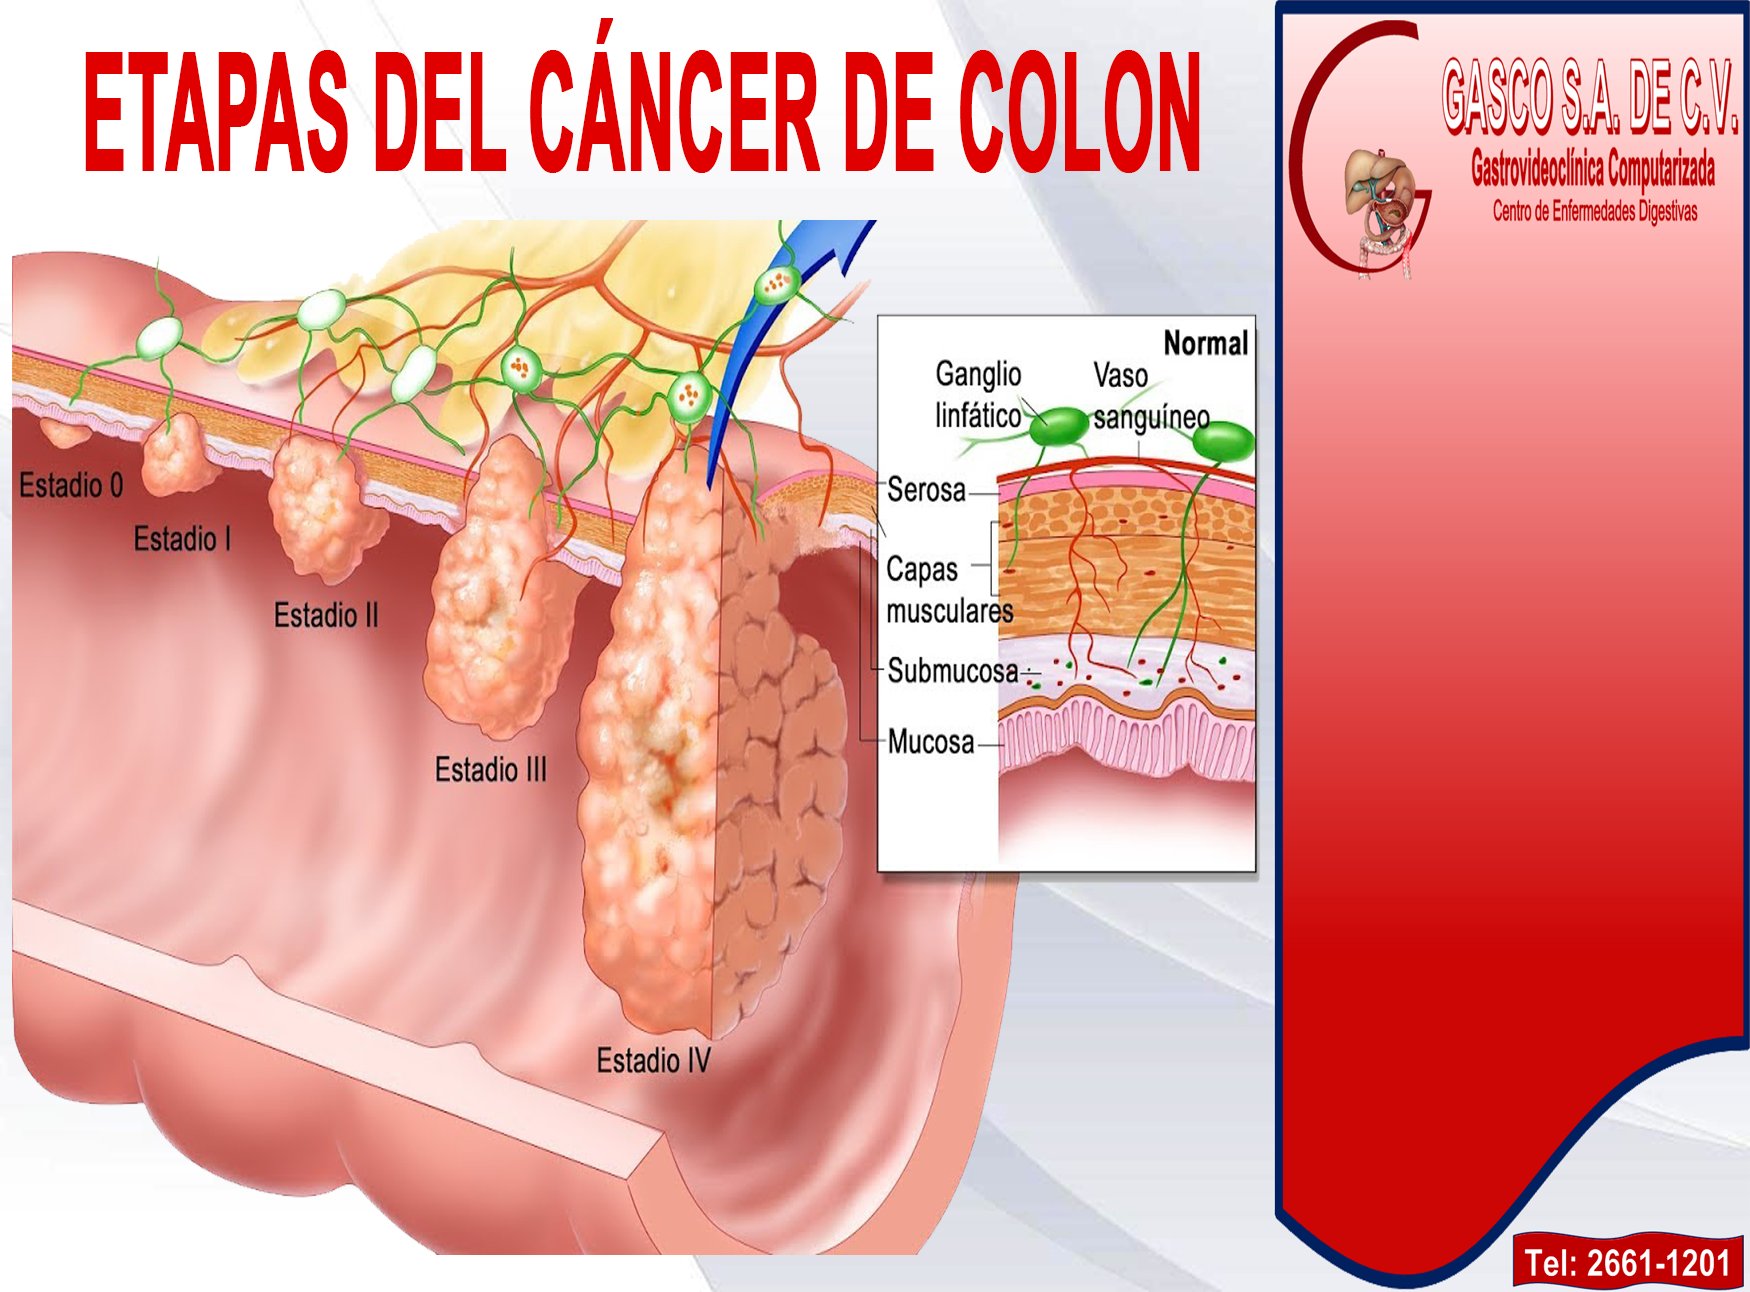 Cancer de colon con ganglios afectados. Statistique d'Usage du Serveur Orphanet orphanet.orpha.net